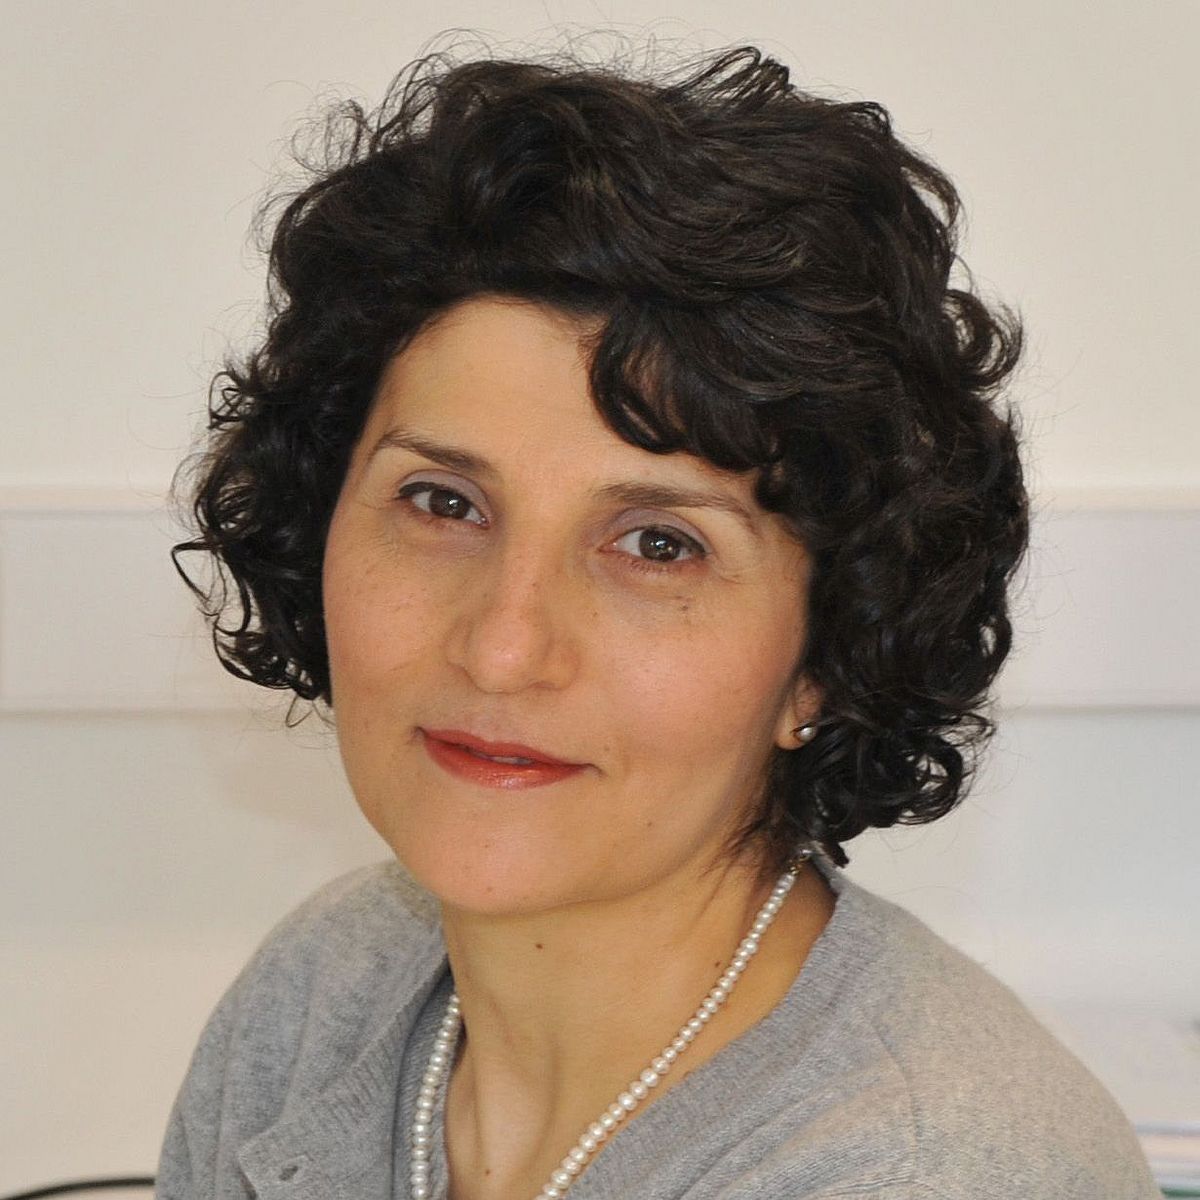 Prof. Deniz Tasdemir - Head of Research Unit